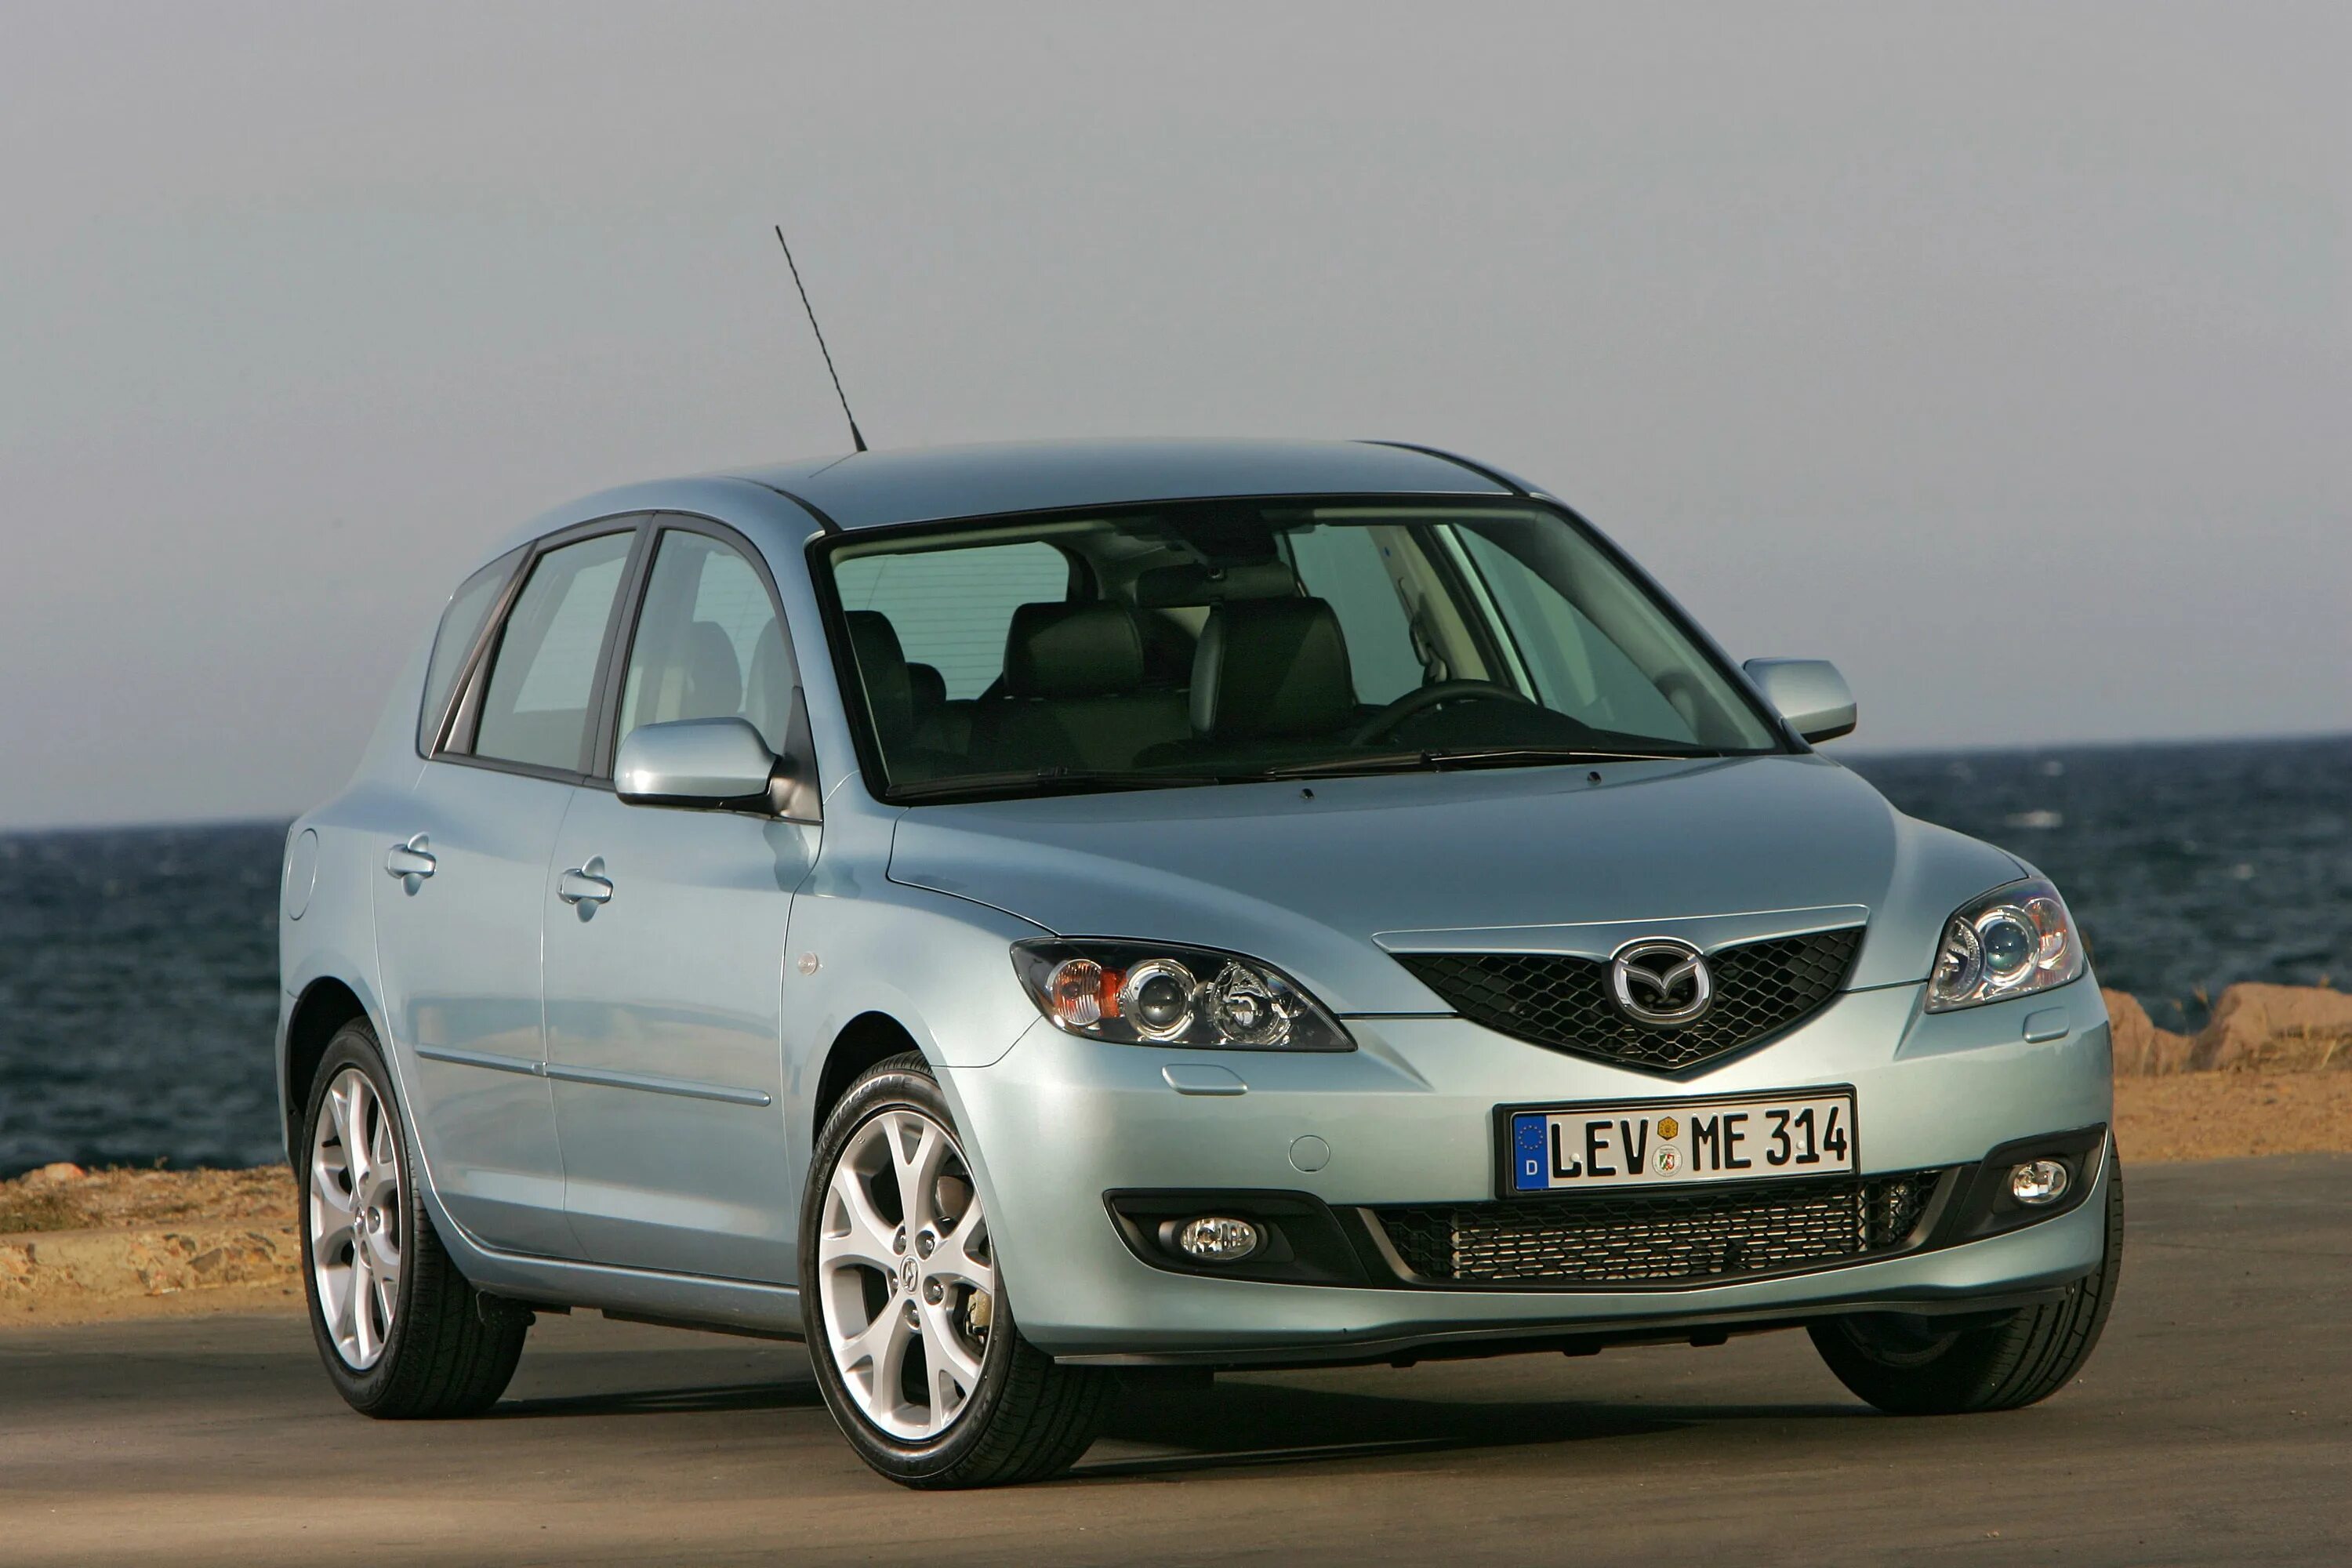 Мазда 3 хэтчбек 1.6. Mazda 3 BK хэтчбек. Mazda 3 BK 1.6 2008. Mazda 3 BK Hatchback 2008. Мазда 3 2006 хэтчбек 1.6.